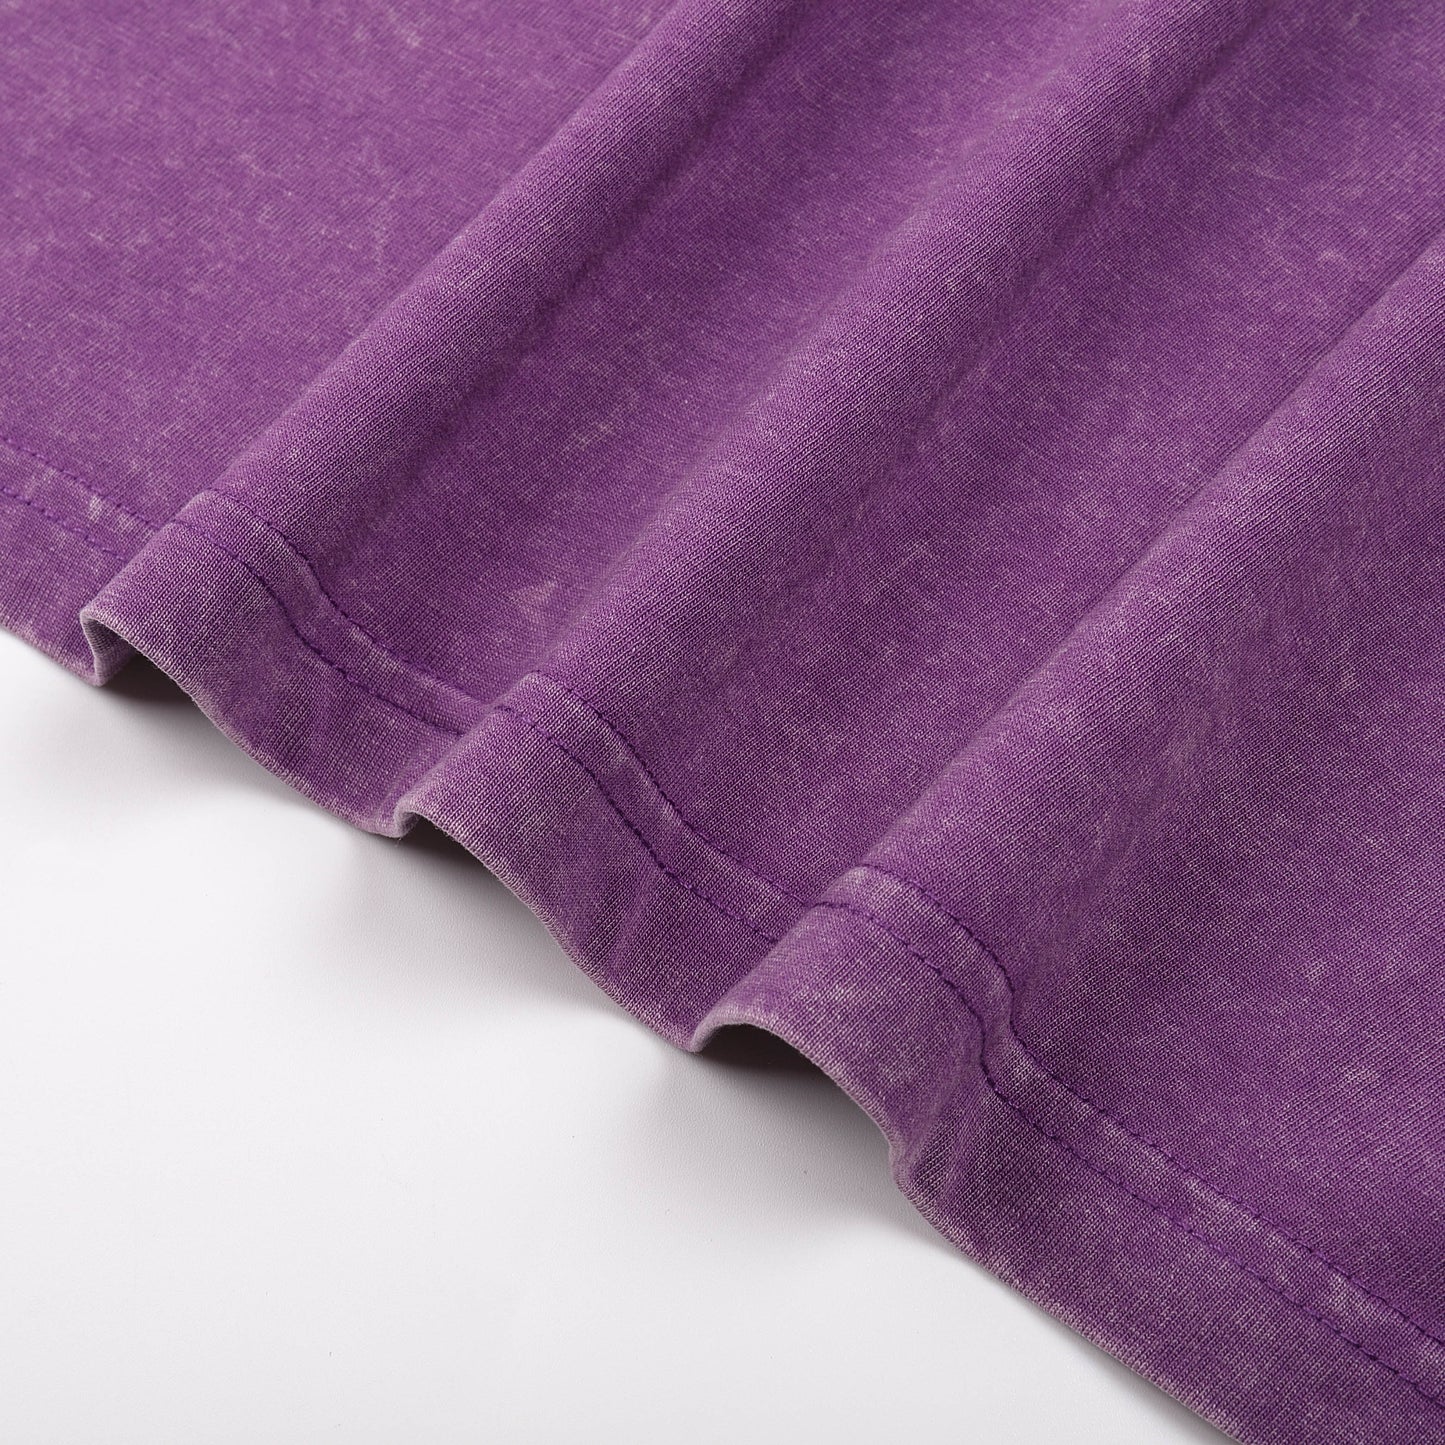 Rubber Duck Fantasia: The Great Wave off Kanagawa Washed T shirt - Purple